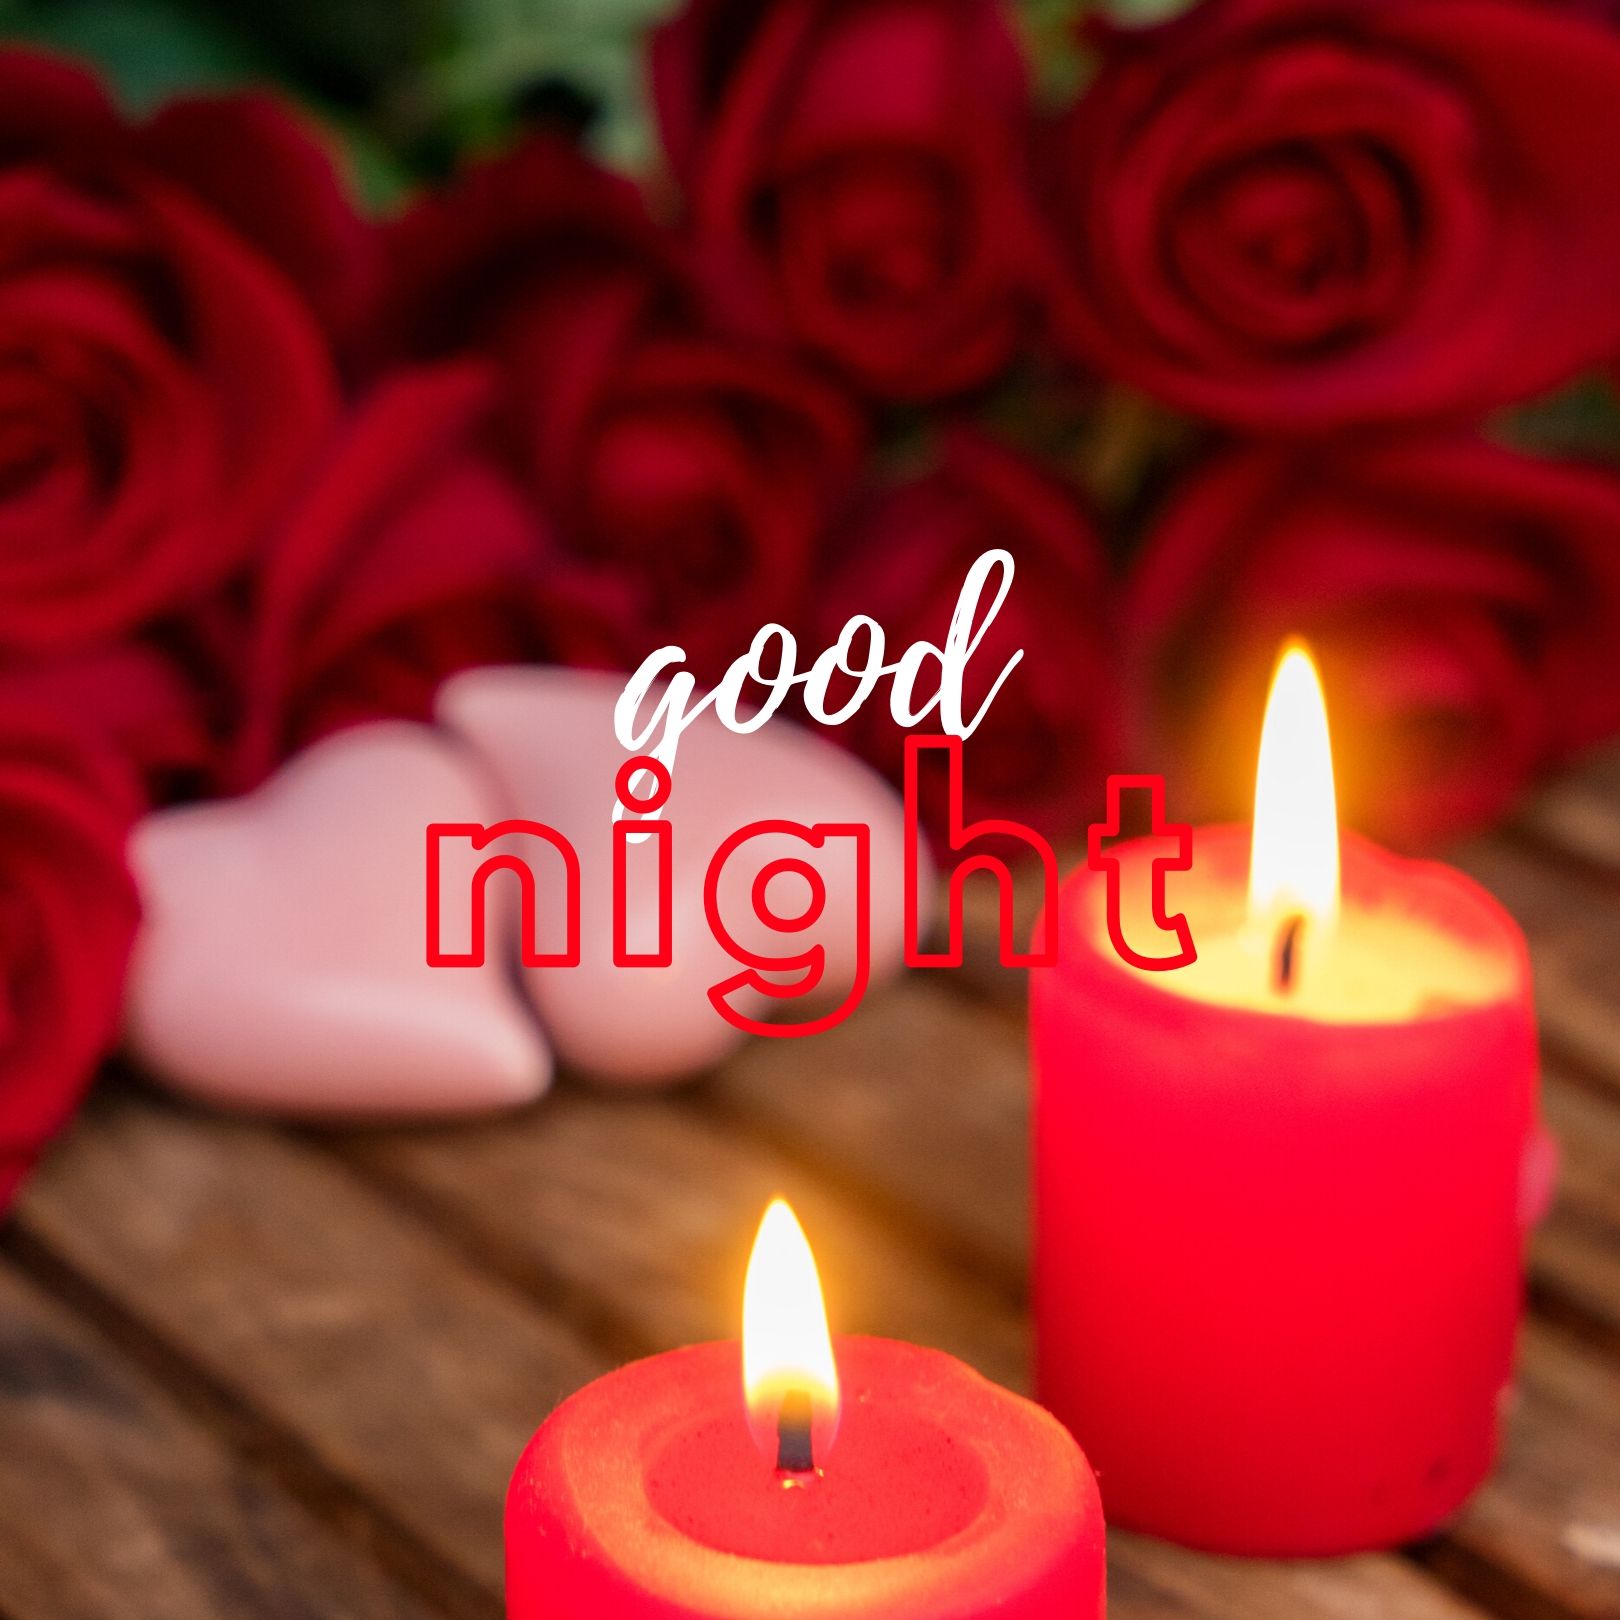 🔥 Good Night rose photo Download free - Images SRkh